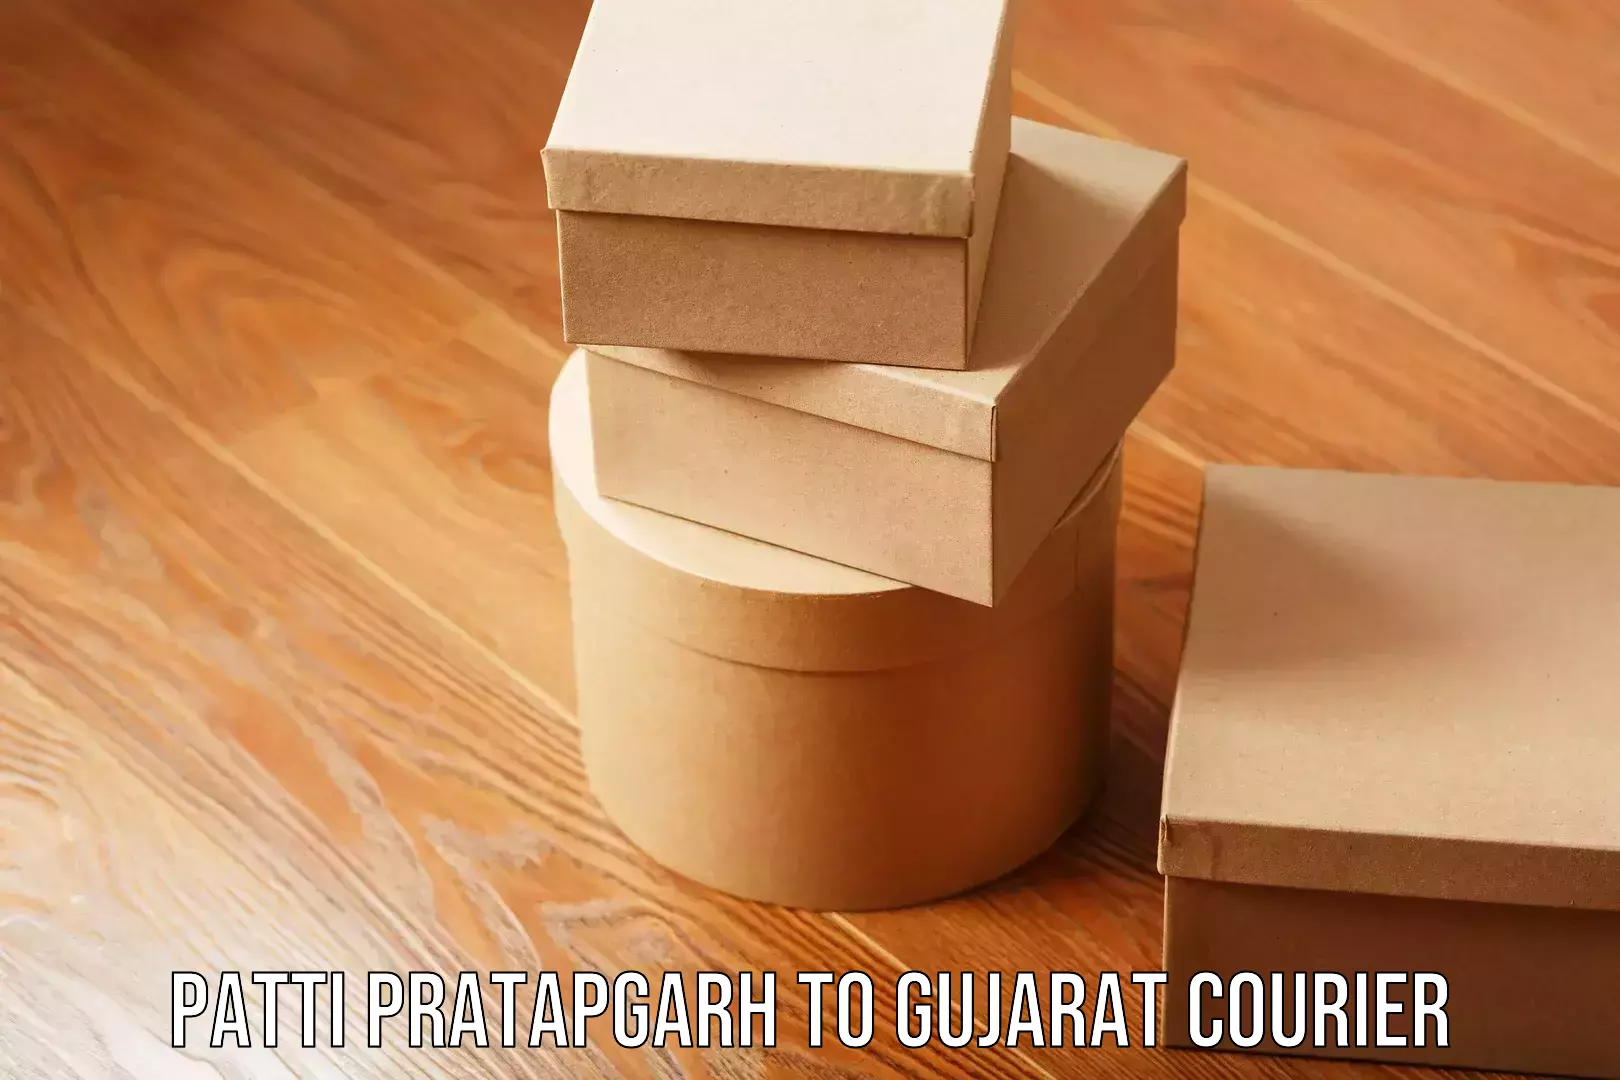 Professional movers and packers Patti Pratapgarh to Gujarat